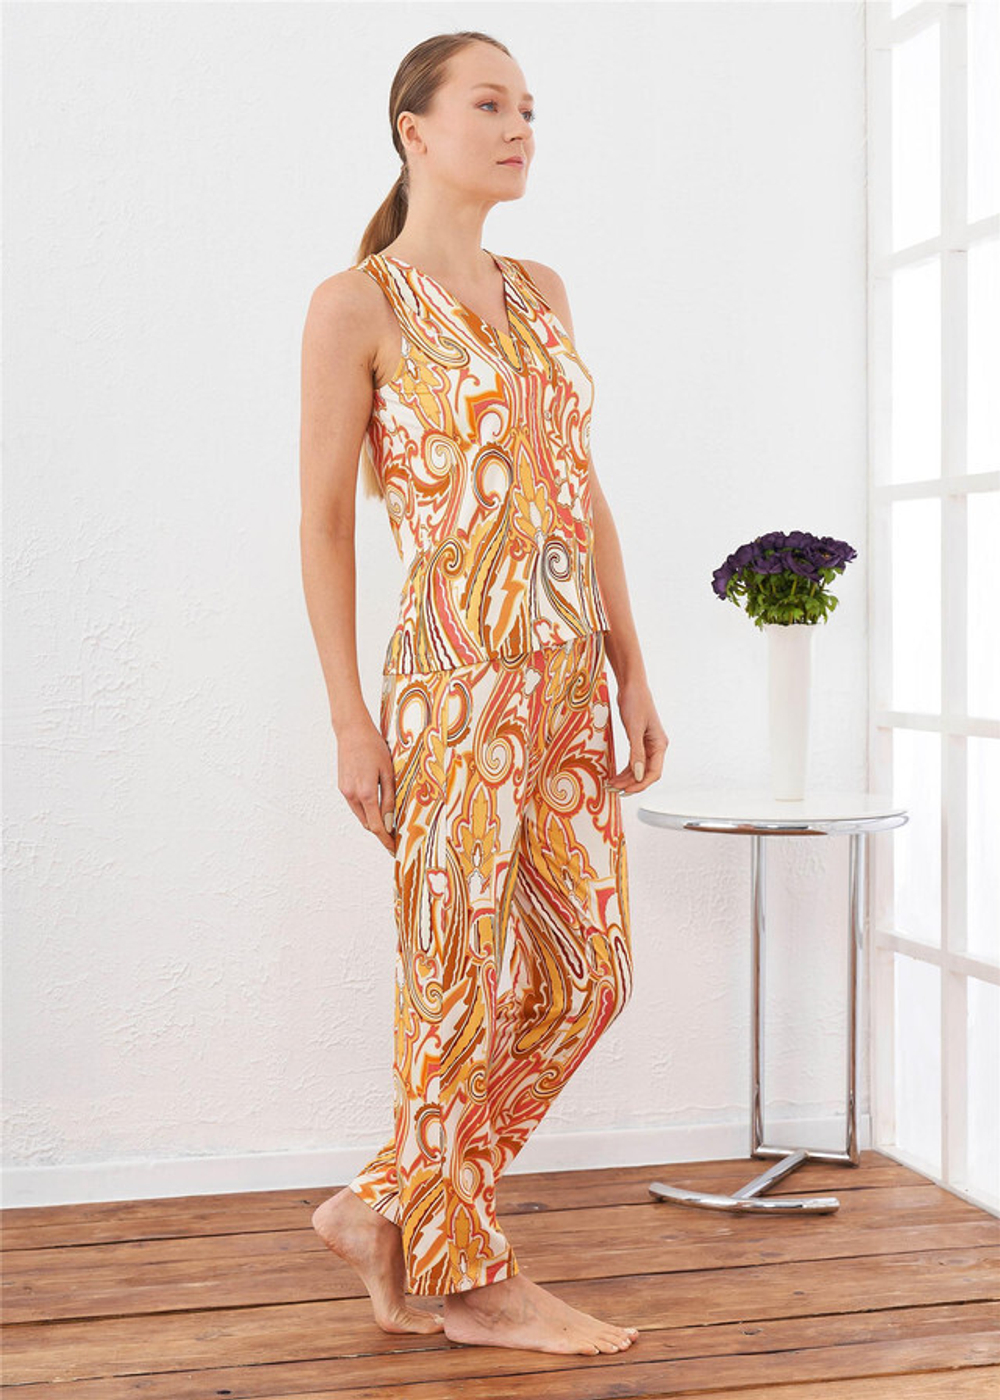 RELAX MODE / Пижама женская со штанами летняя вискоза домашний костюм - 10584